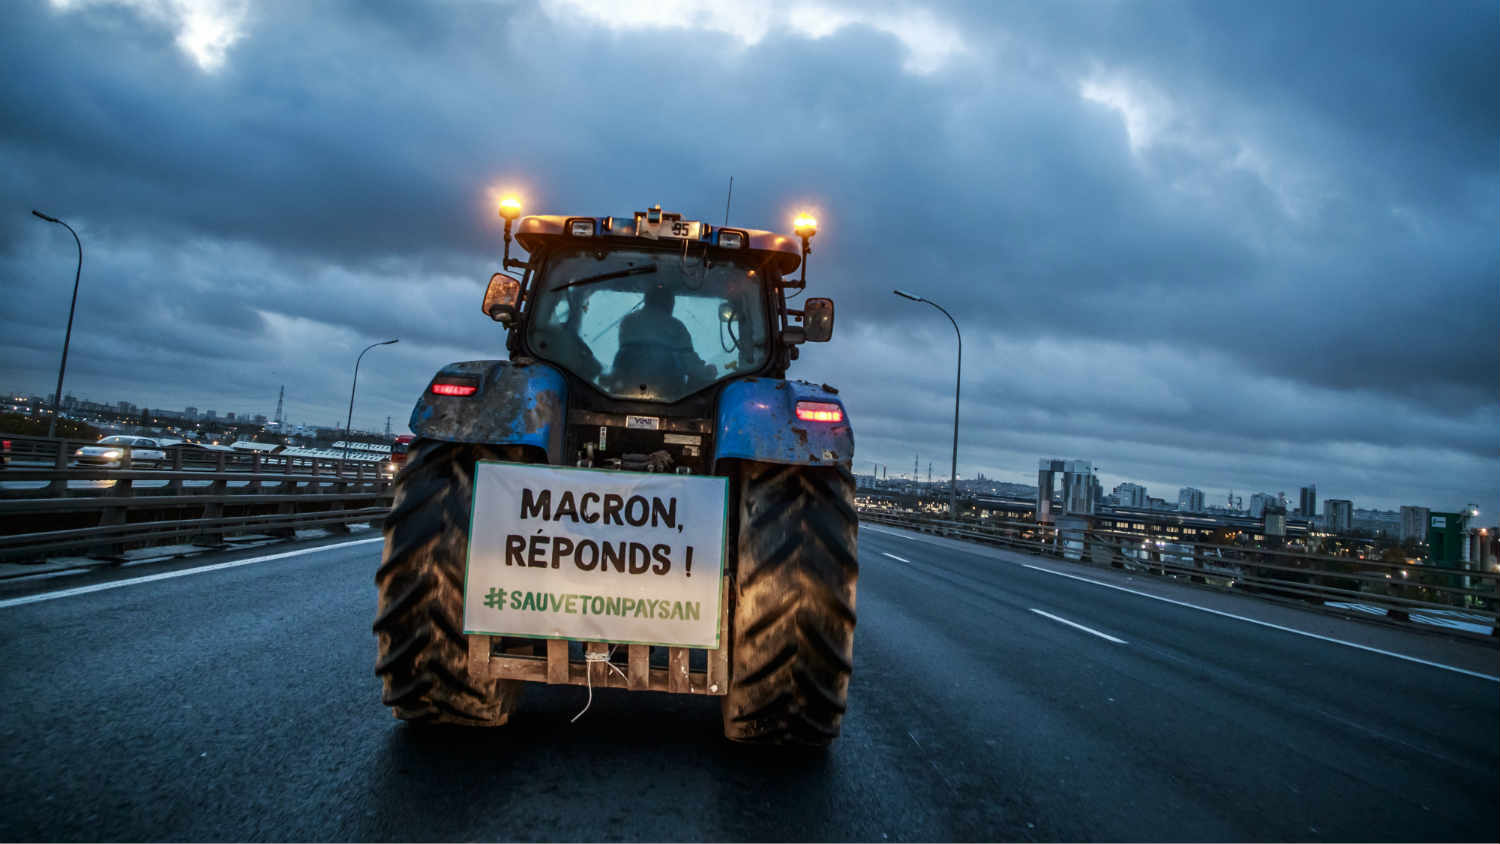 Traktori su ušli u Pariz 1